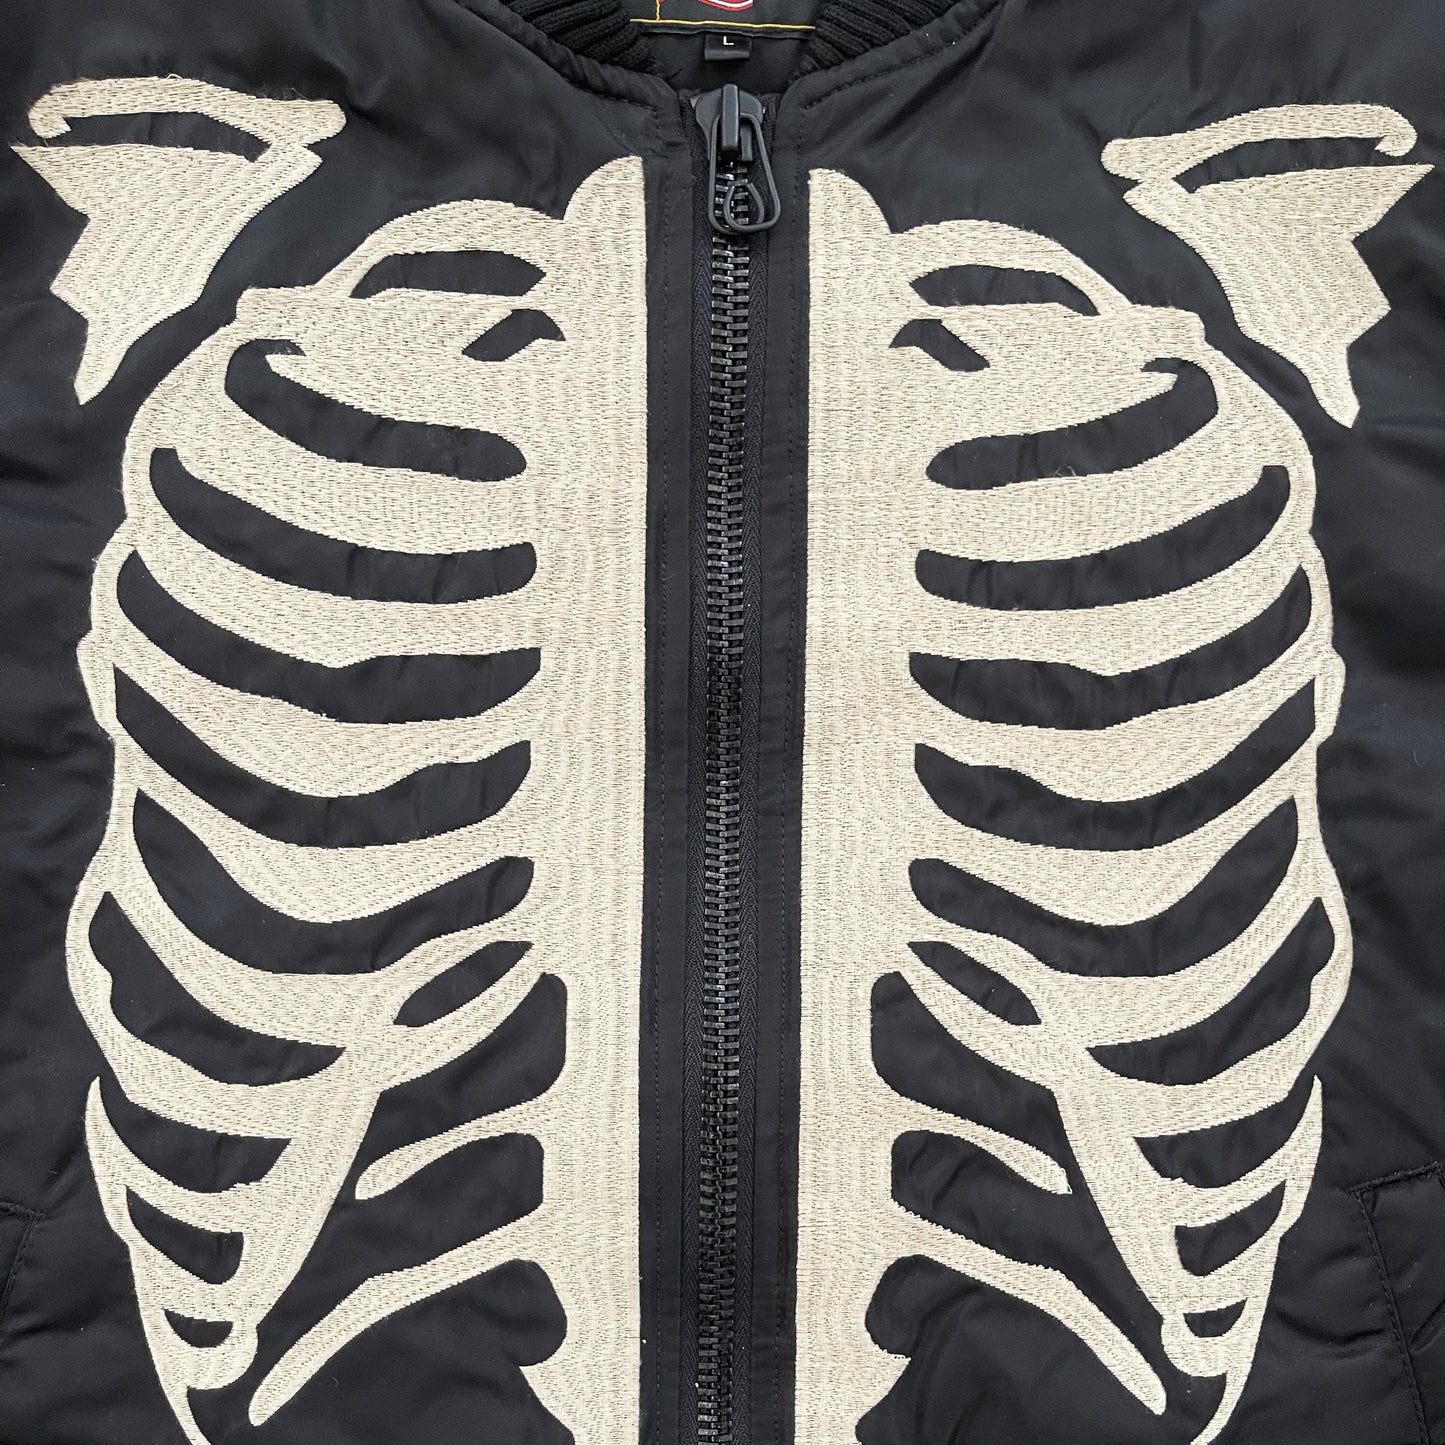 Vanson Leathers Skeleton Bomber Jacket